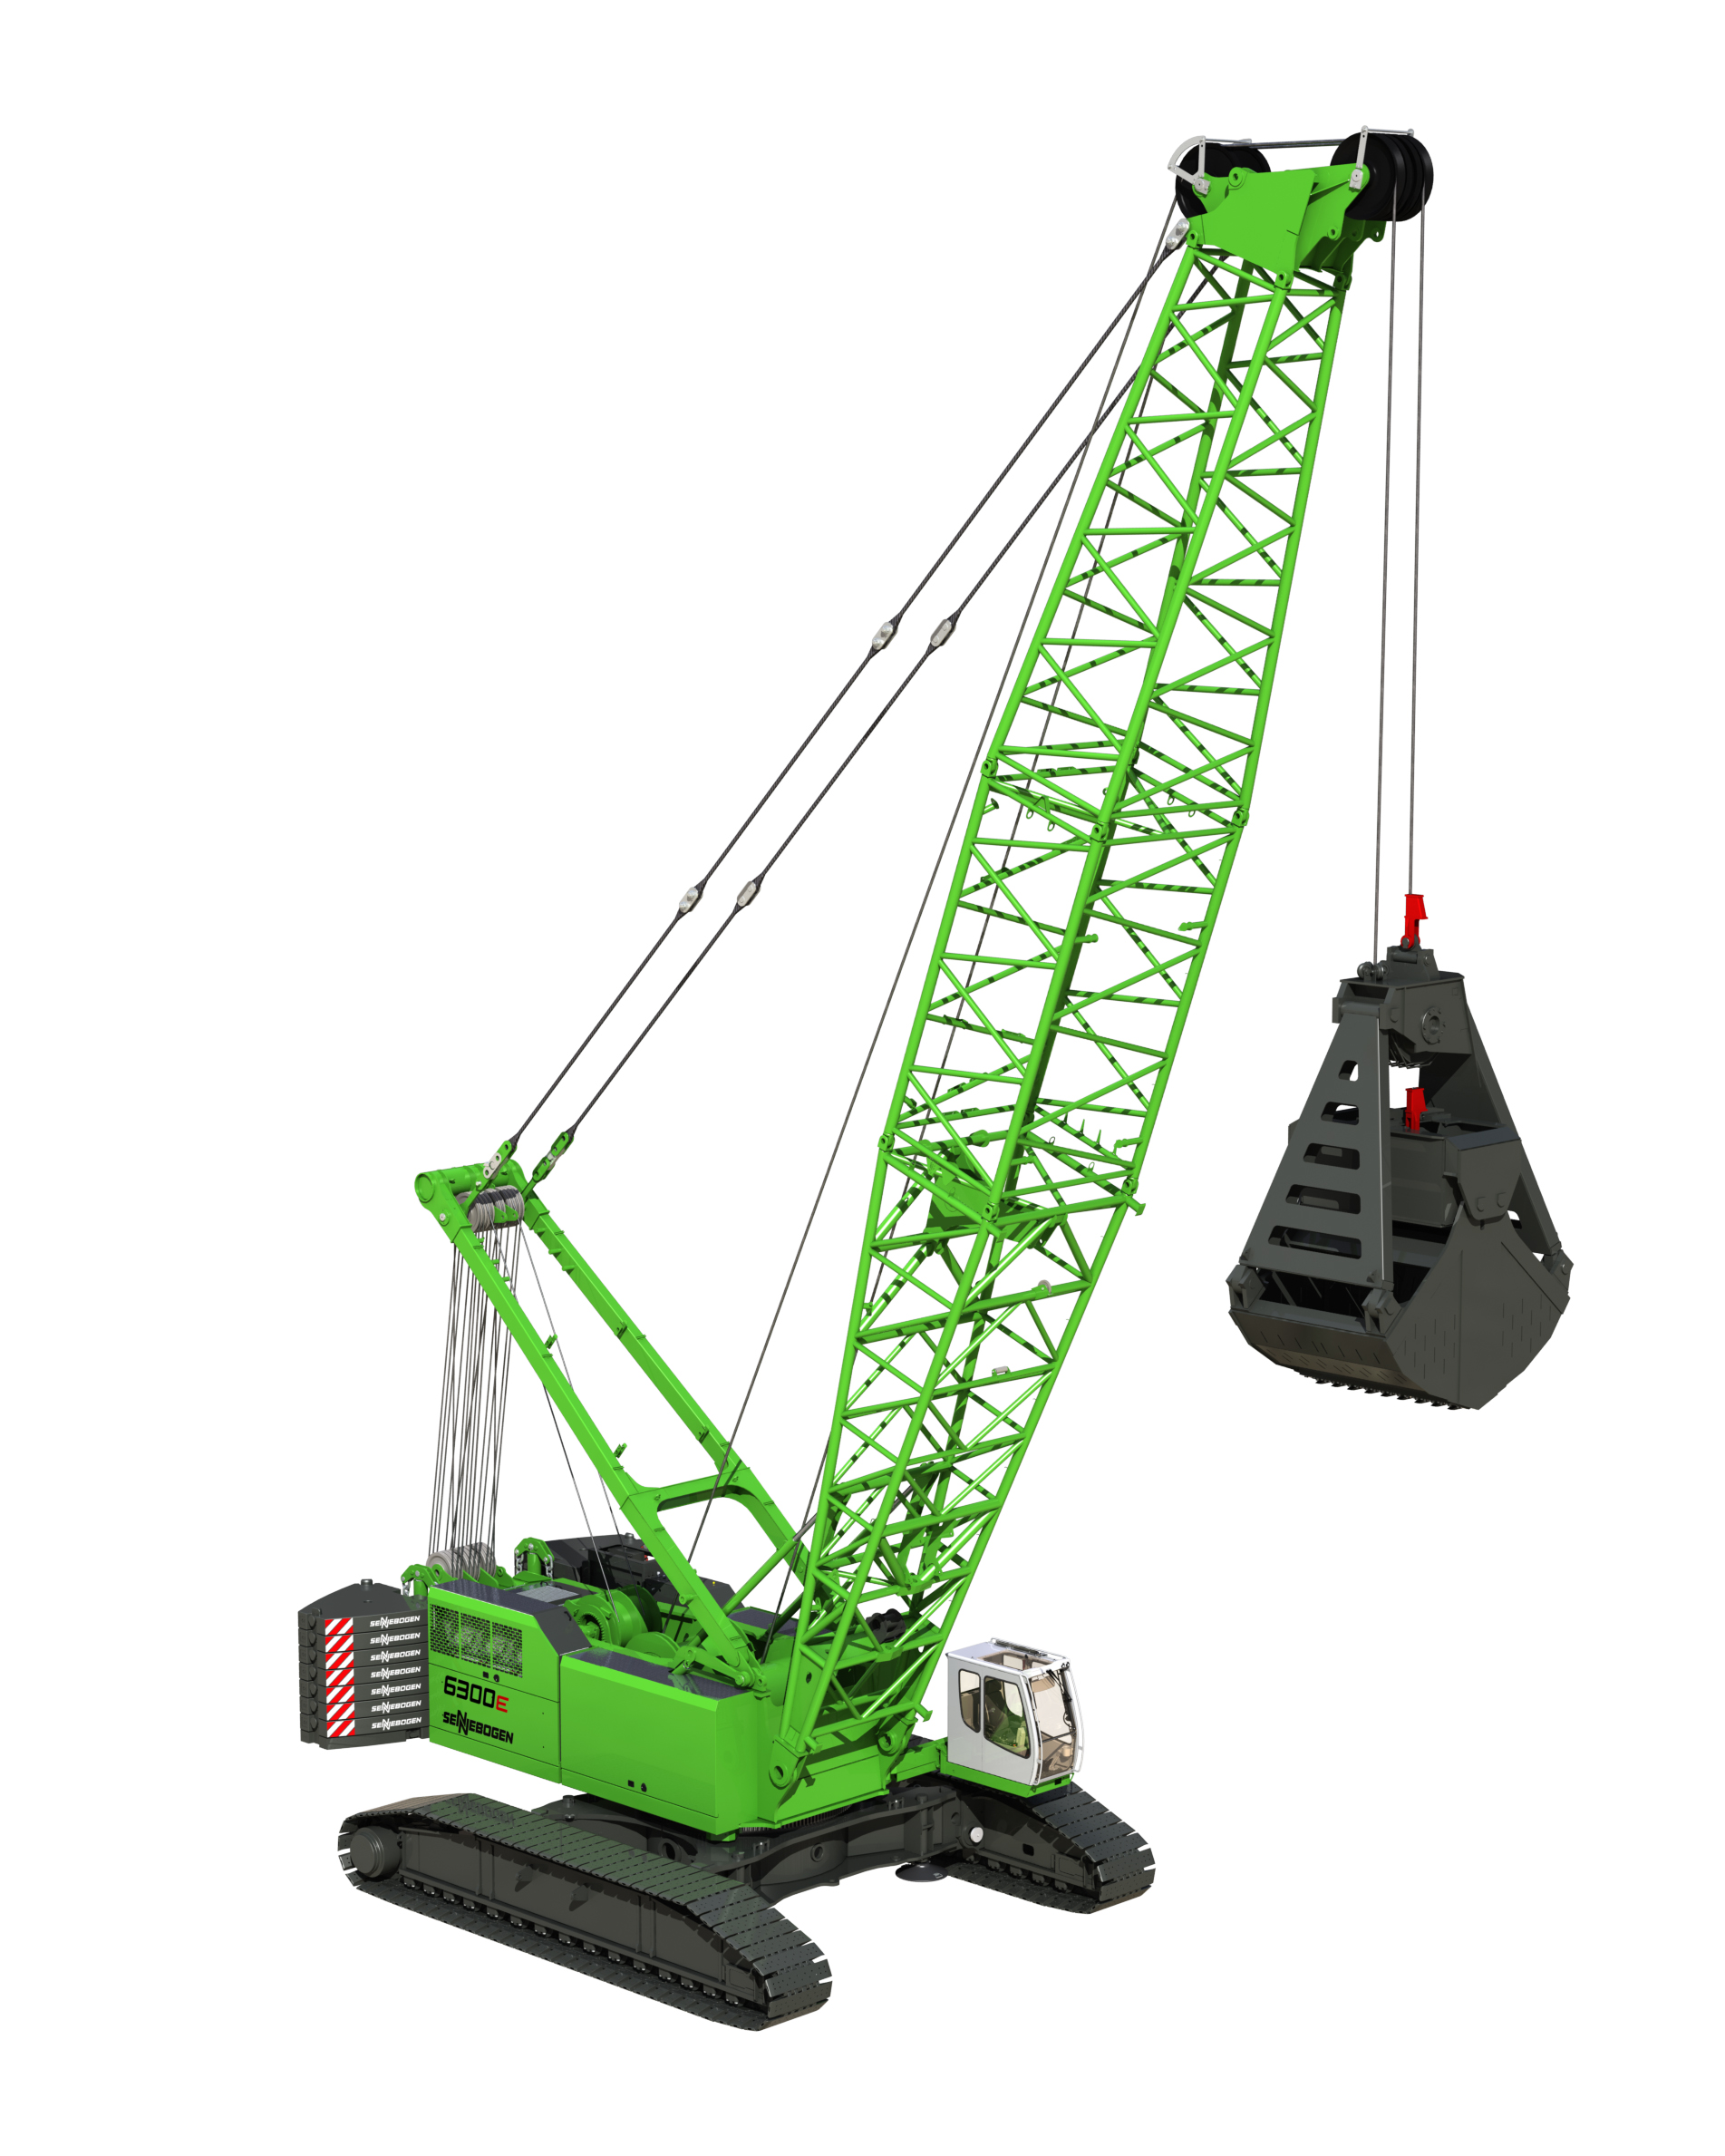 300 t duty cycle crawler crane from SENNEBOGEN - SENNEBOGEN ...